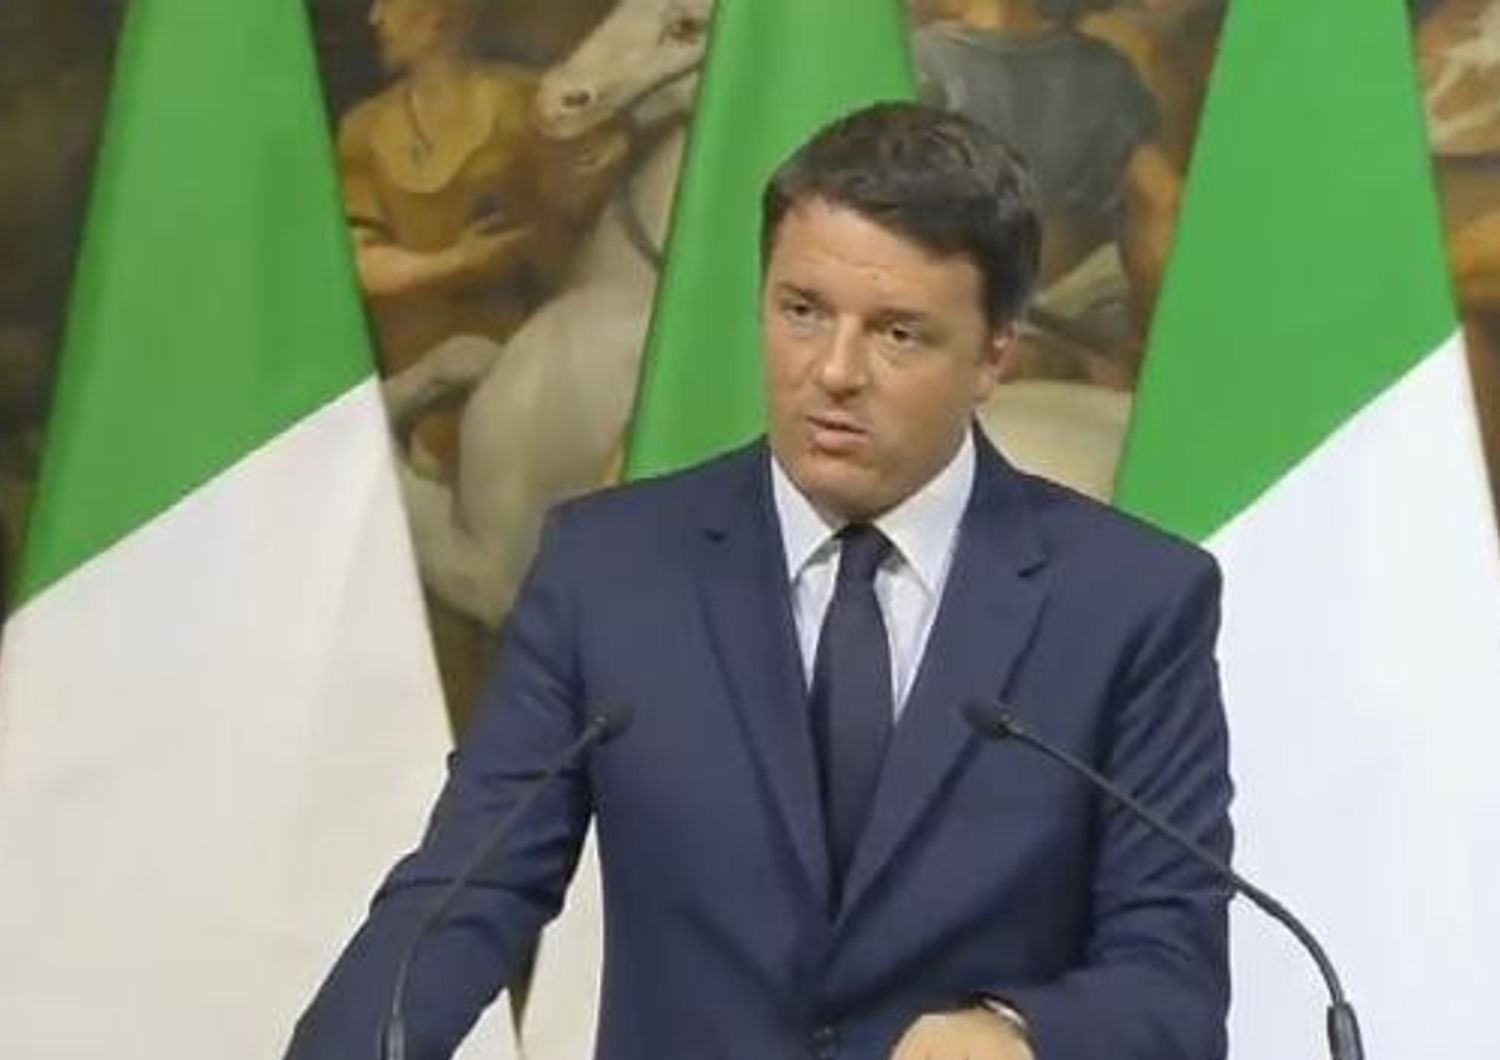 &nbsp; Matteo Renzi conferenza stampa